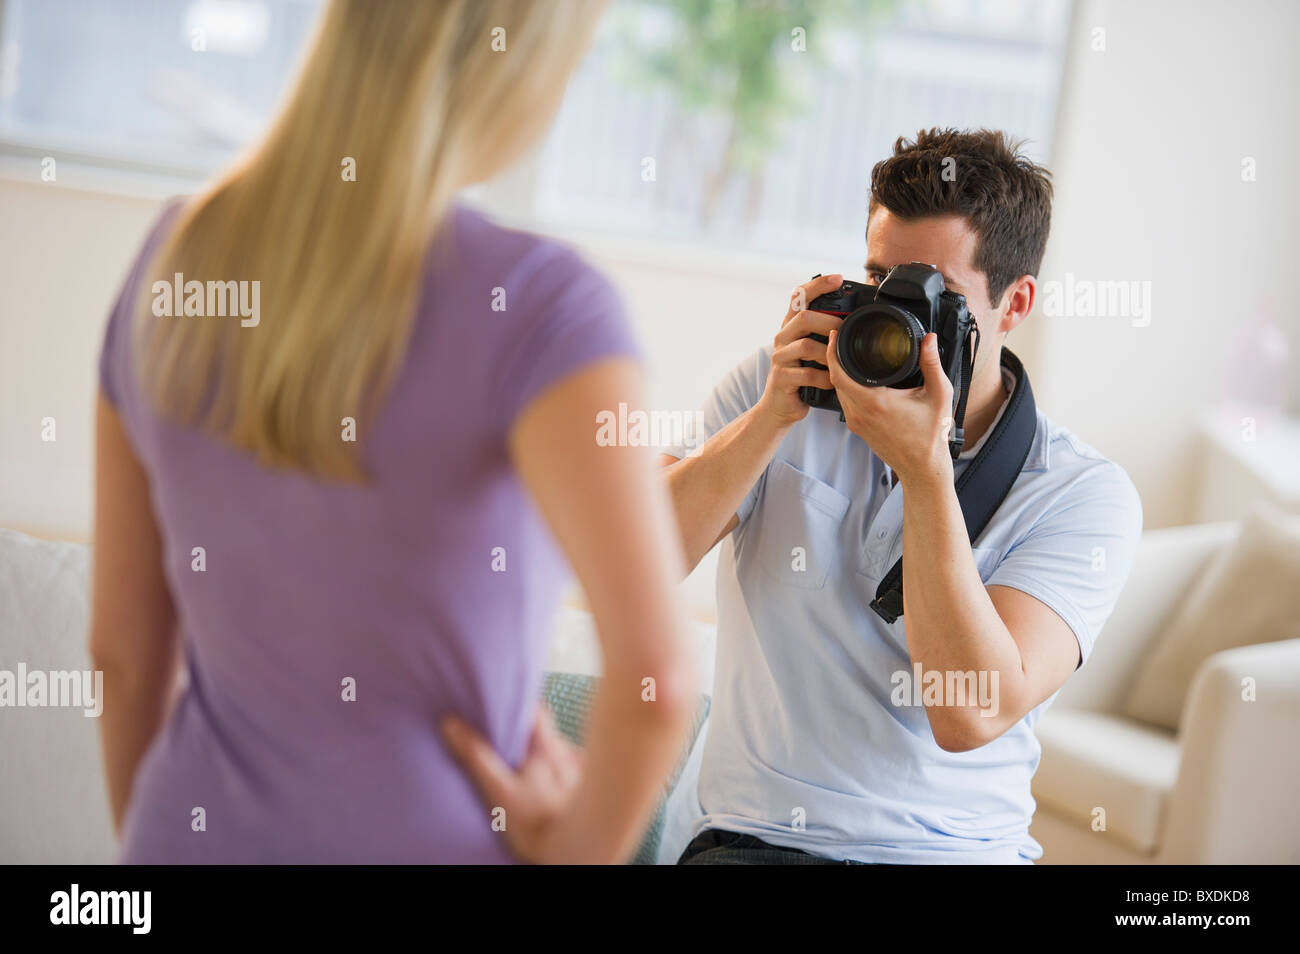 Man taking photograph of woman Stock Photo